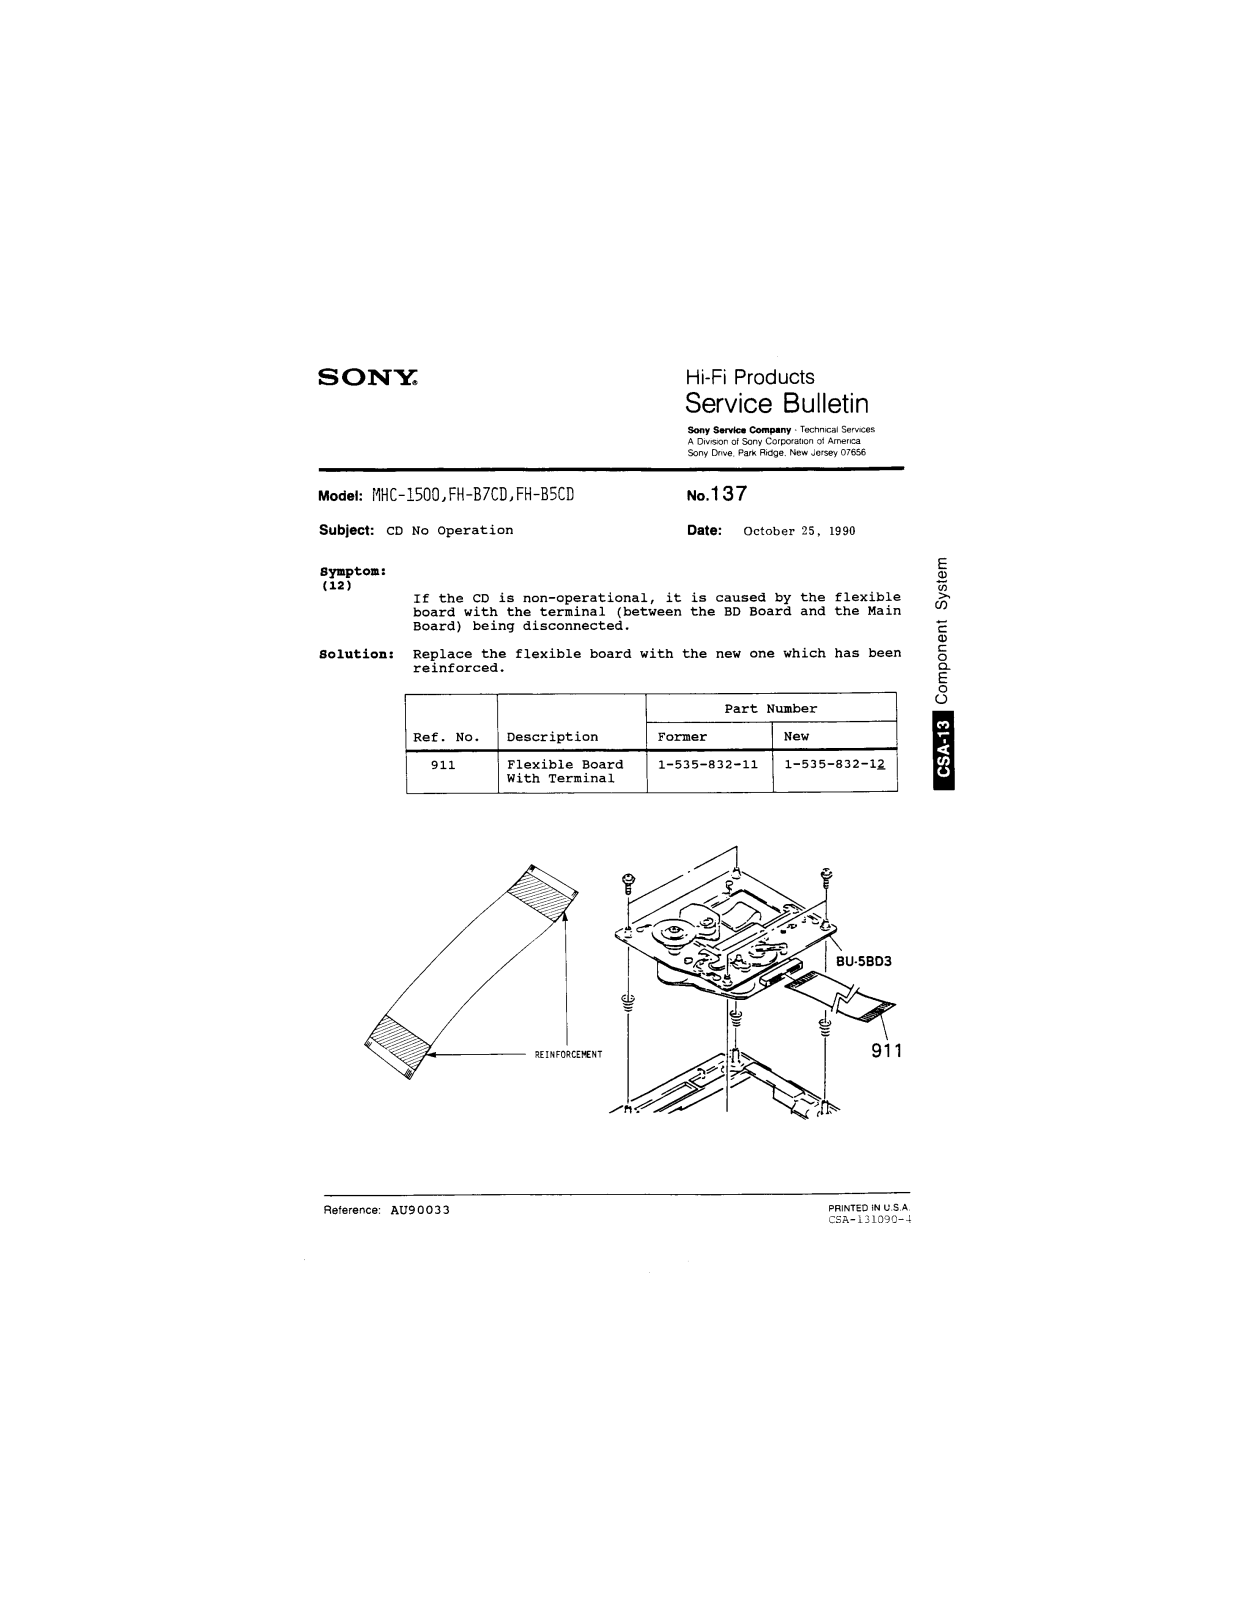 Sony MHC-1500, FH-B7CD, FH-B5CD Service Manual